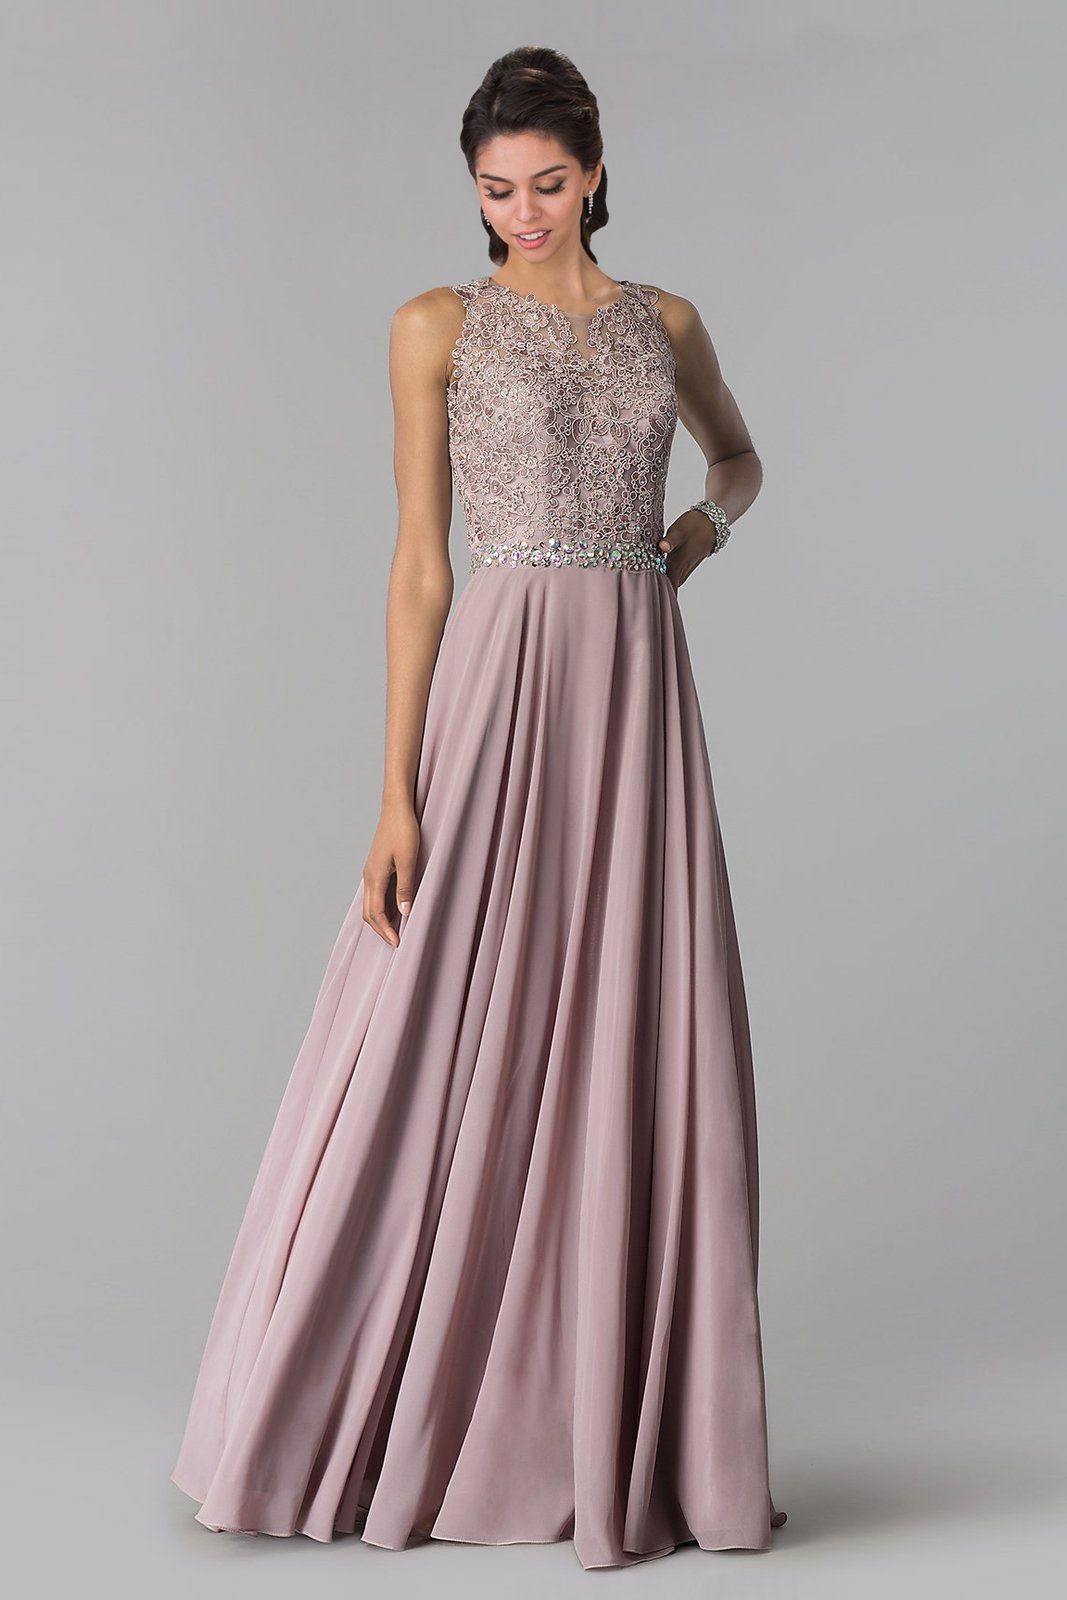 Navy Long Lace Appliqued Chiffon Dress by Elizabeth K GL2417-Long Formal Dresses-ABC Fashion